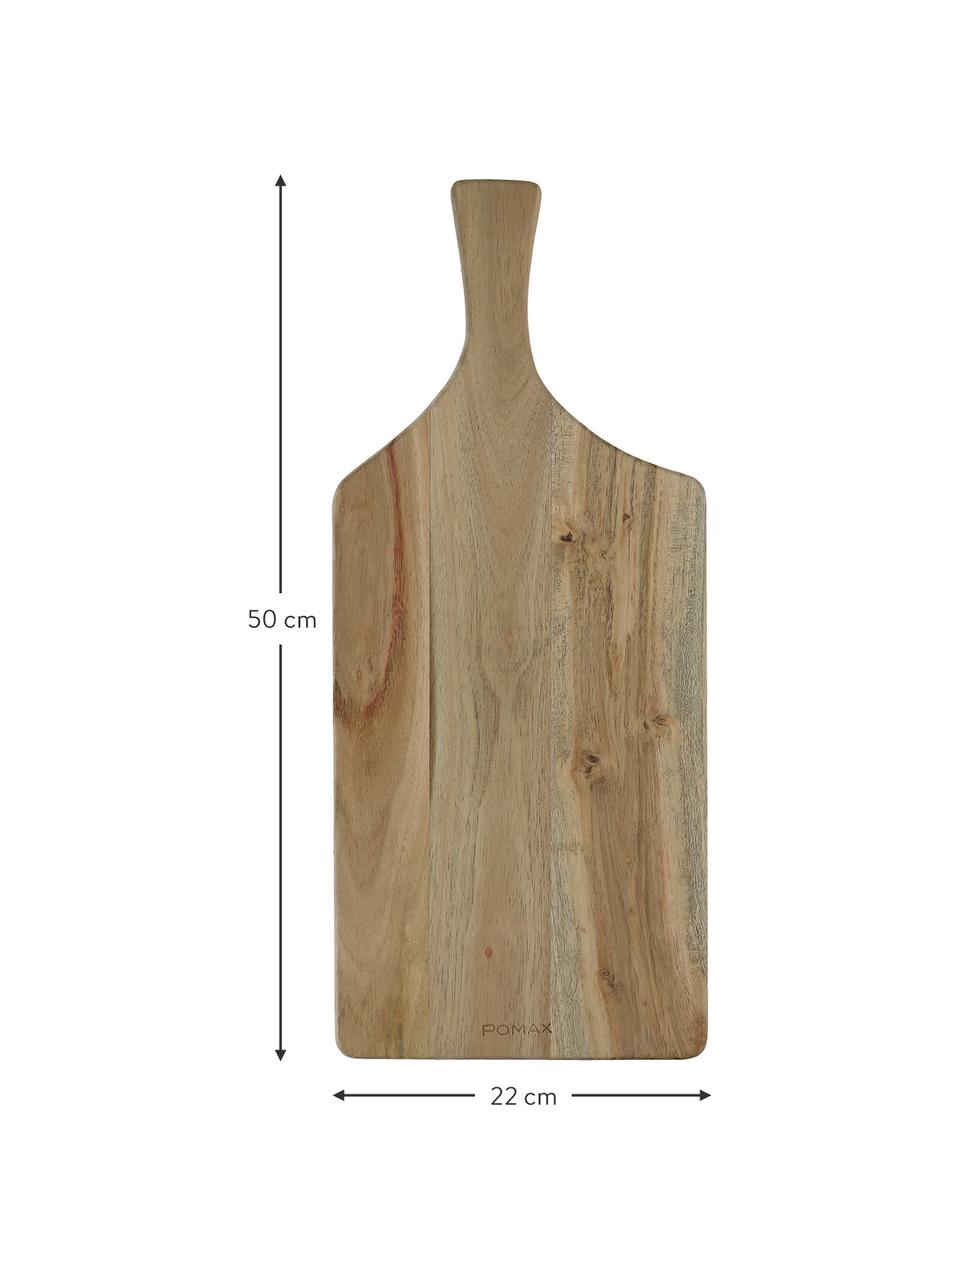 Akazienholz-Schneidebrett Limitless, L 50 x B 22 cm, Akazienholz, Dunkles Holz, L 50 x B 22 cm